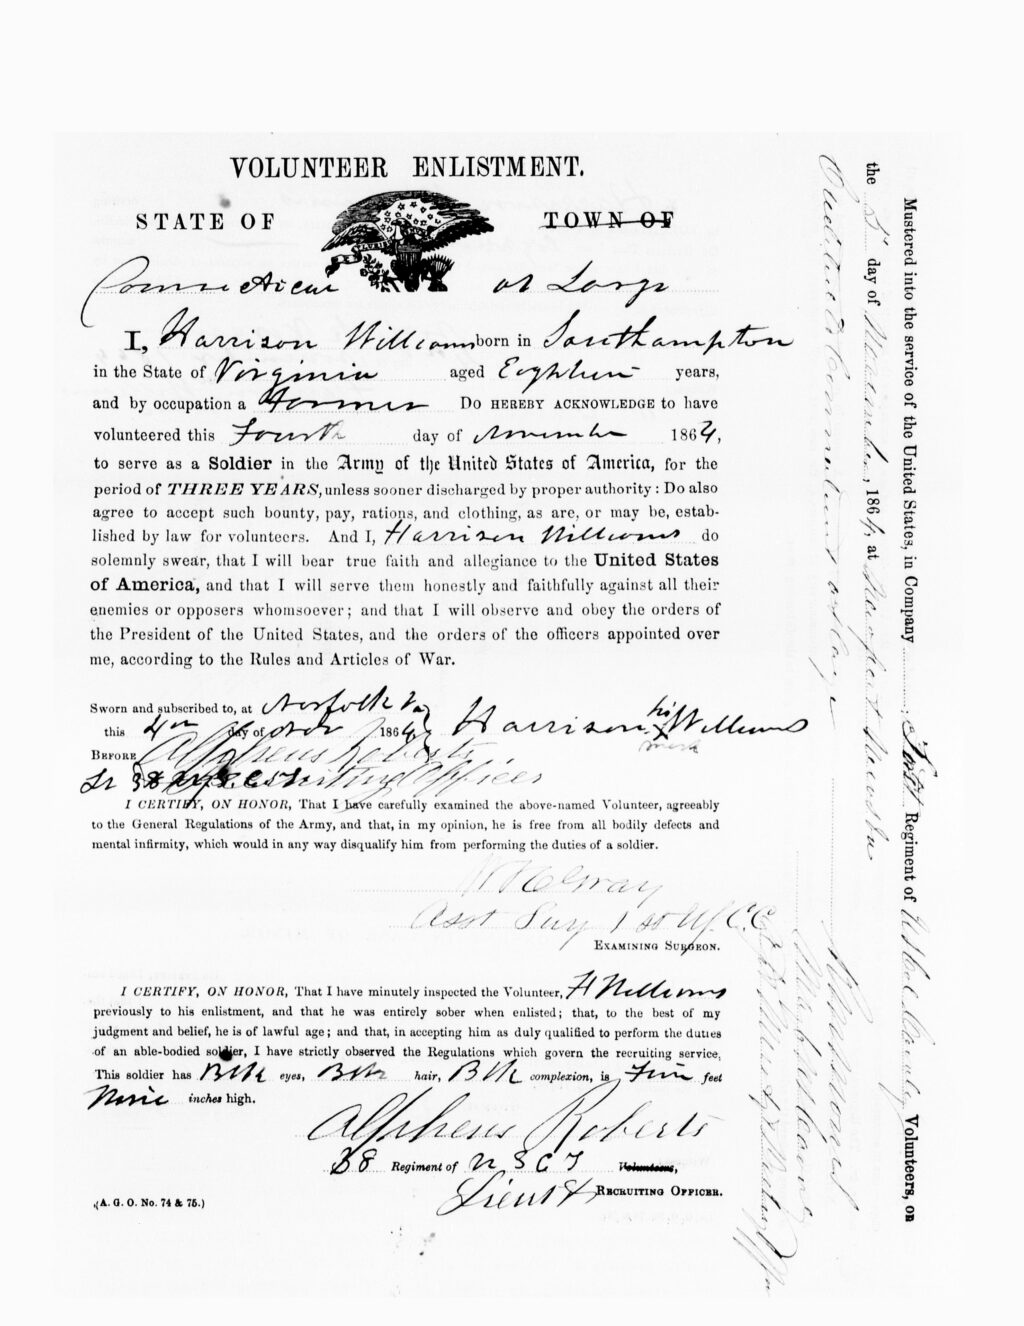 Volunteer Enlistment Form for Harrison Williams-Parson Sykes (Public Domain)